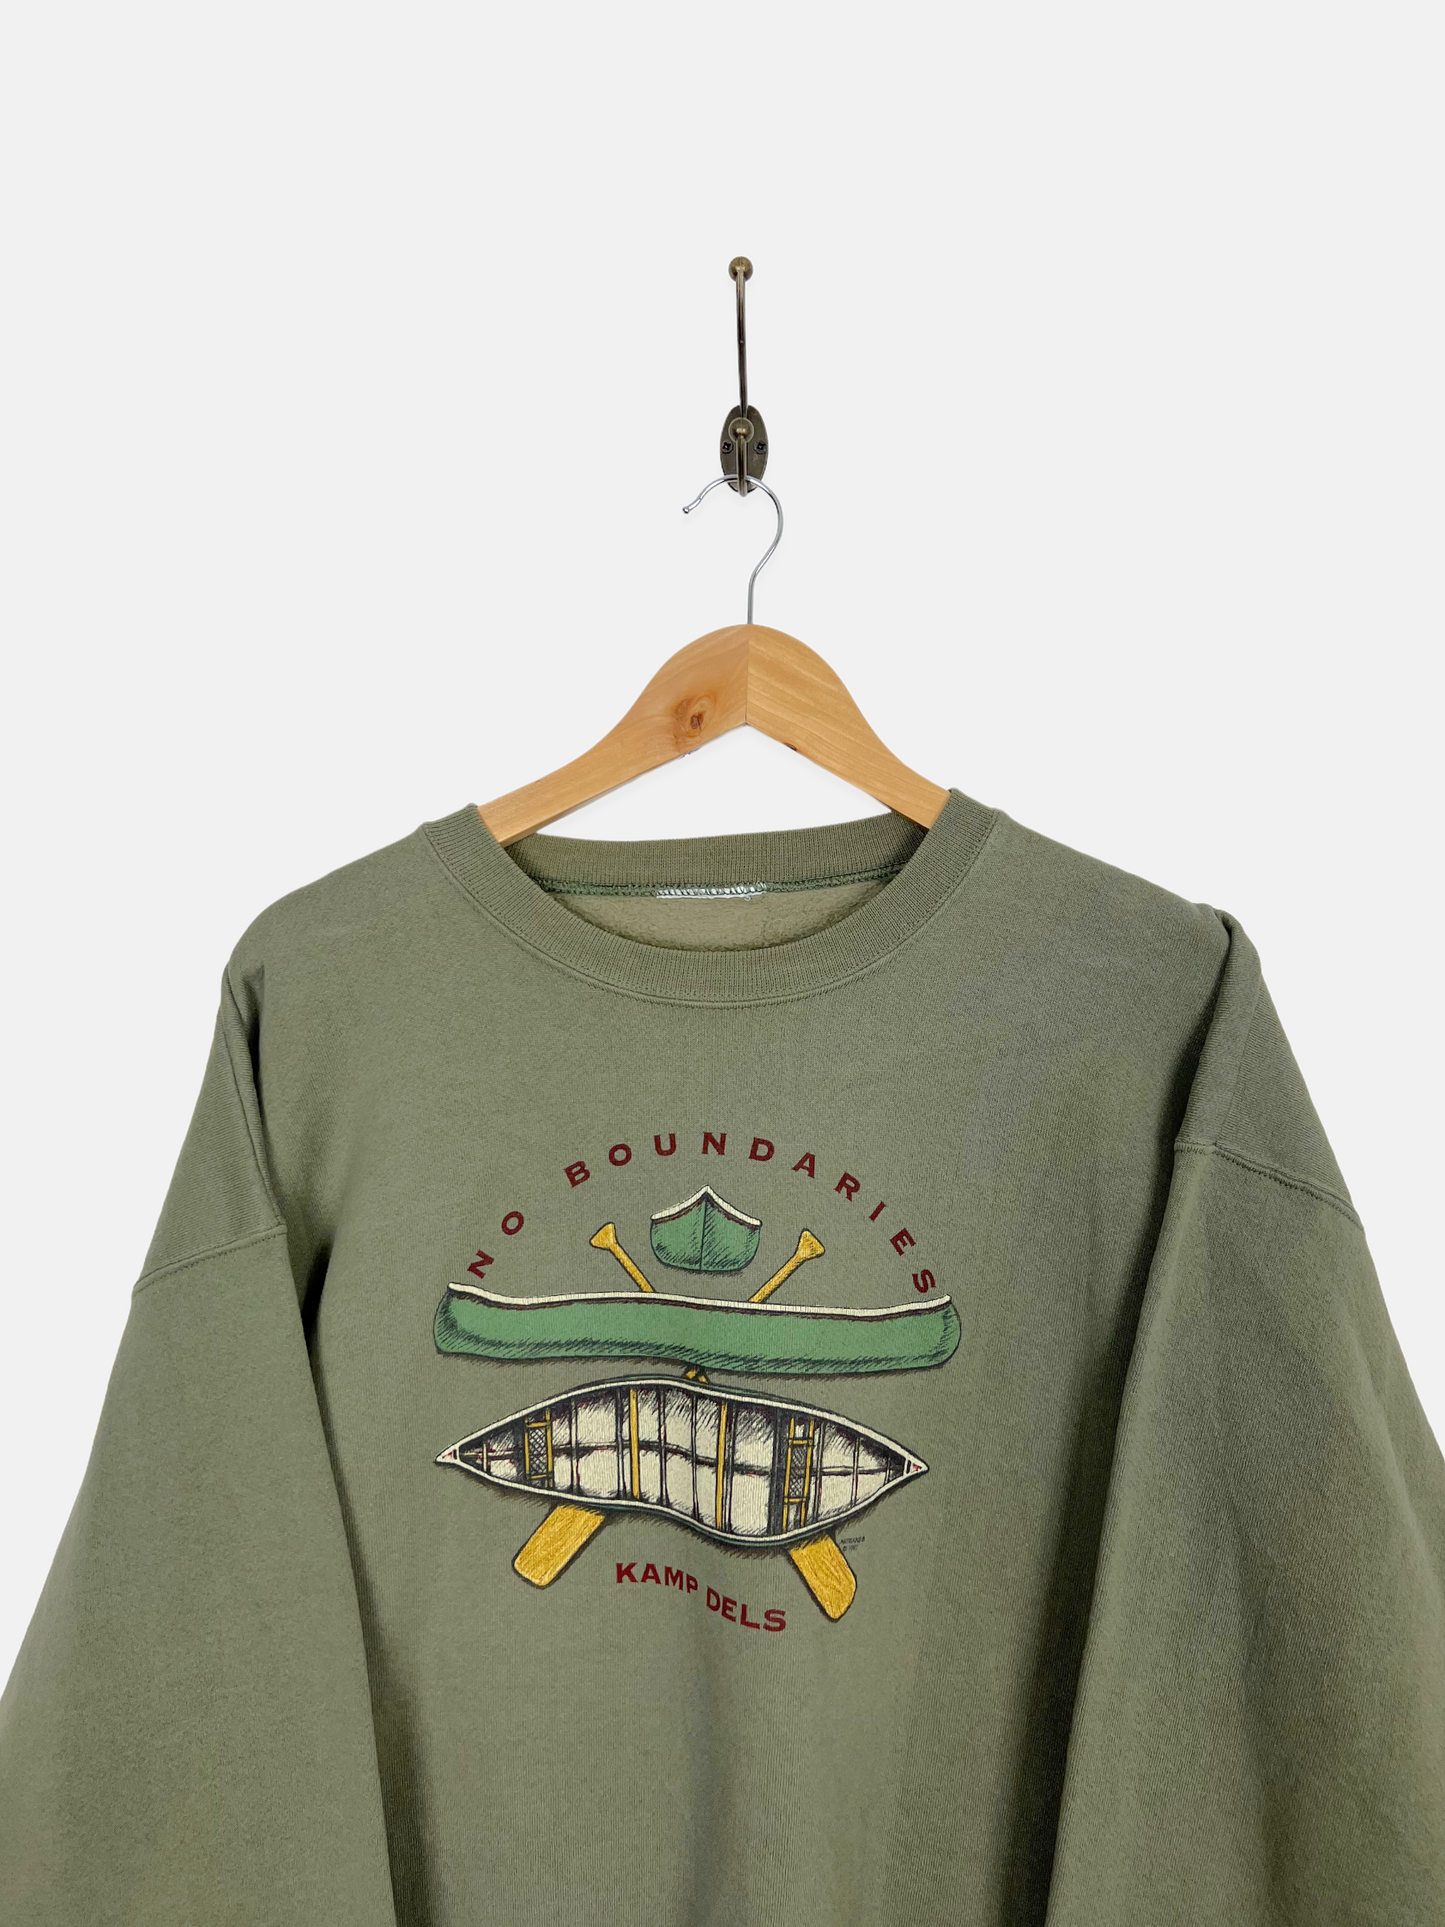 90's Kamp Dels No Boundaries Vintage Sweatshirt Size L